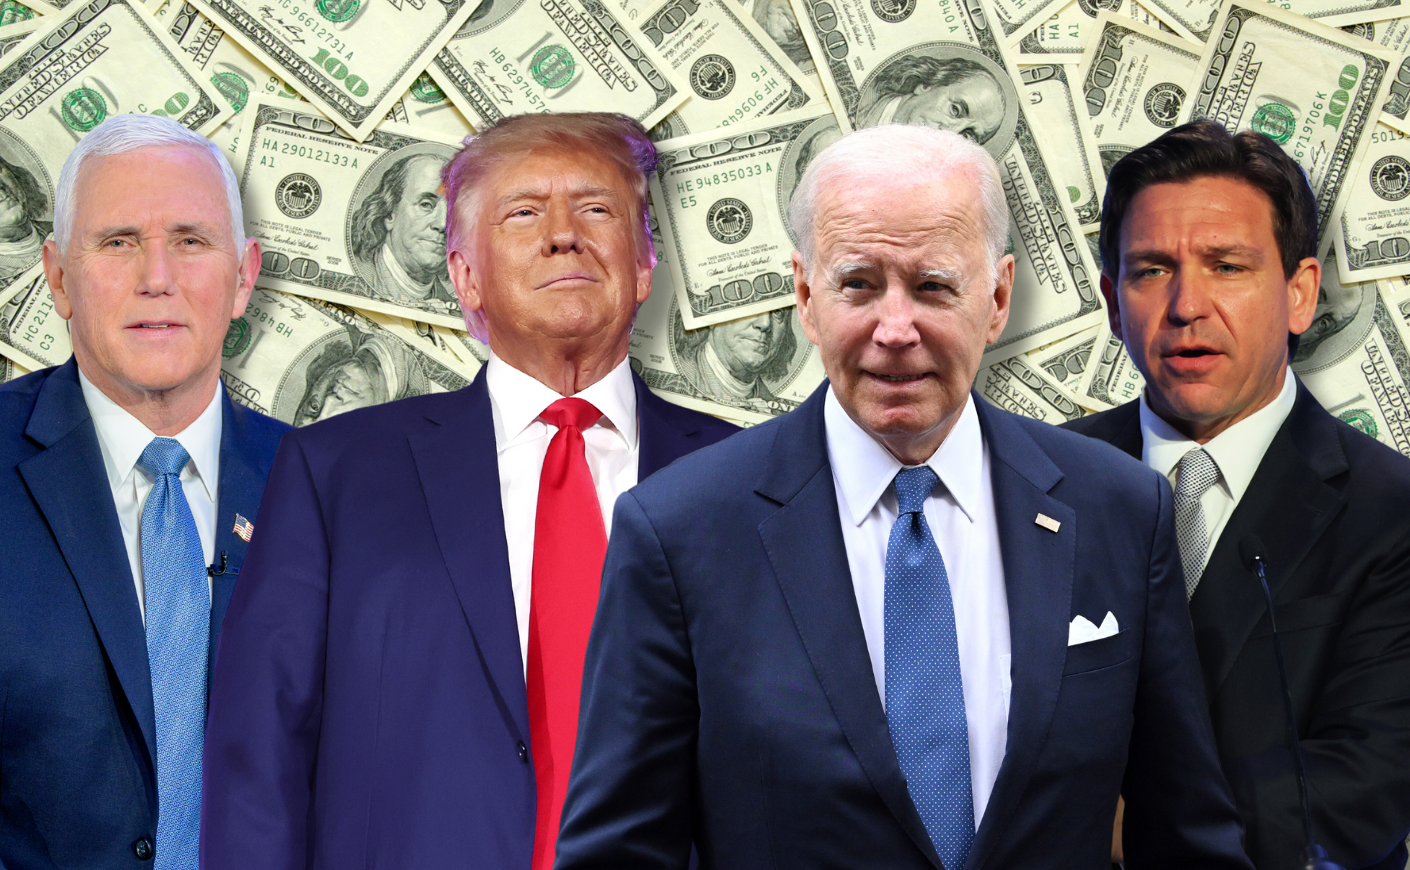 Mike Pence, Donald Trump, Joe Biden, and Ron DeSantis on background of $100 bills